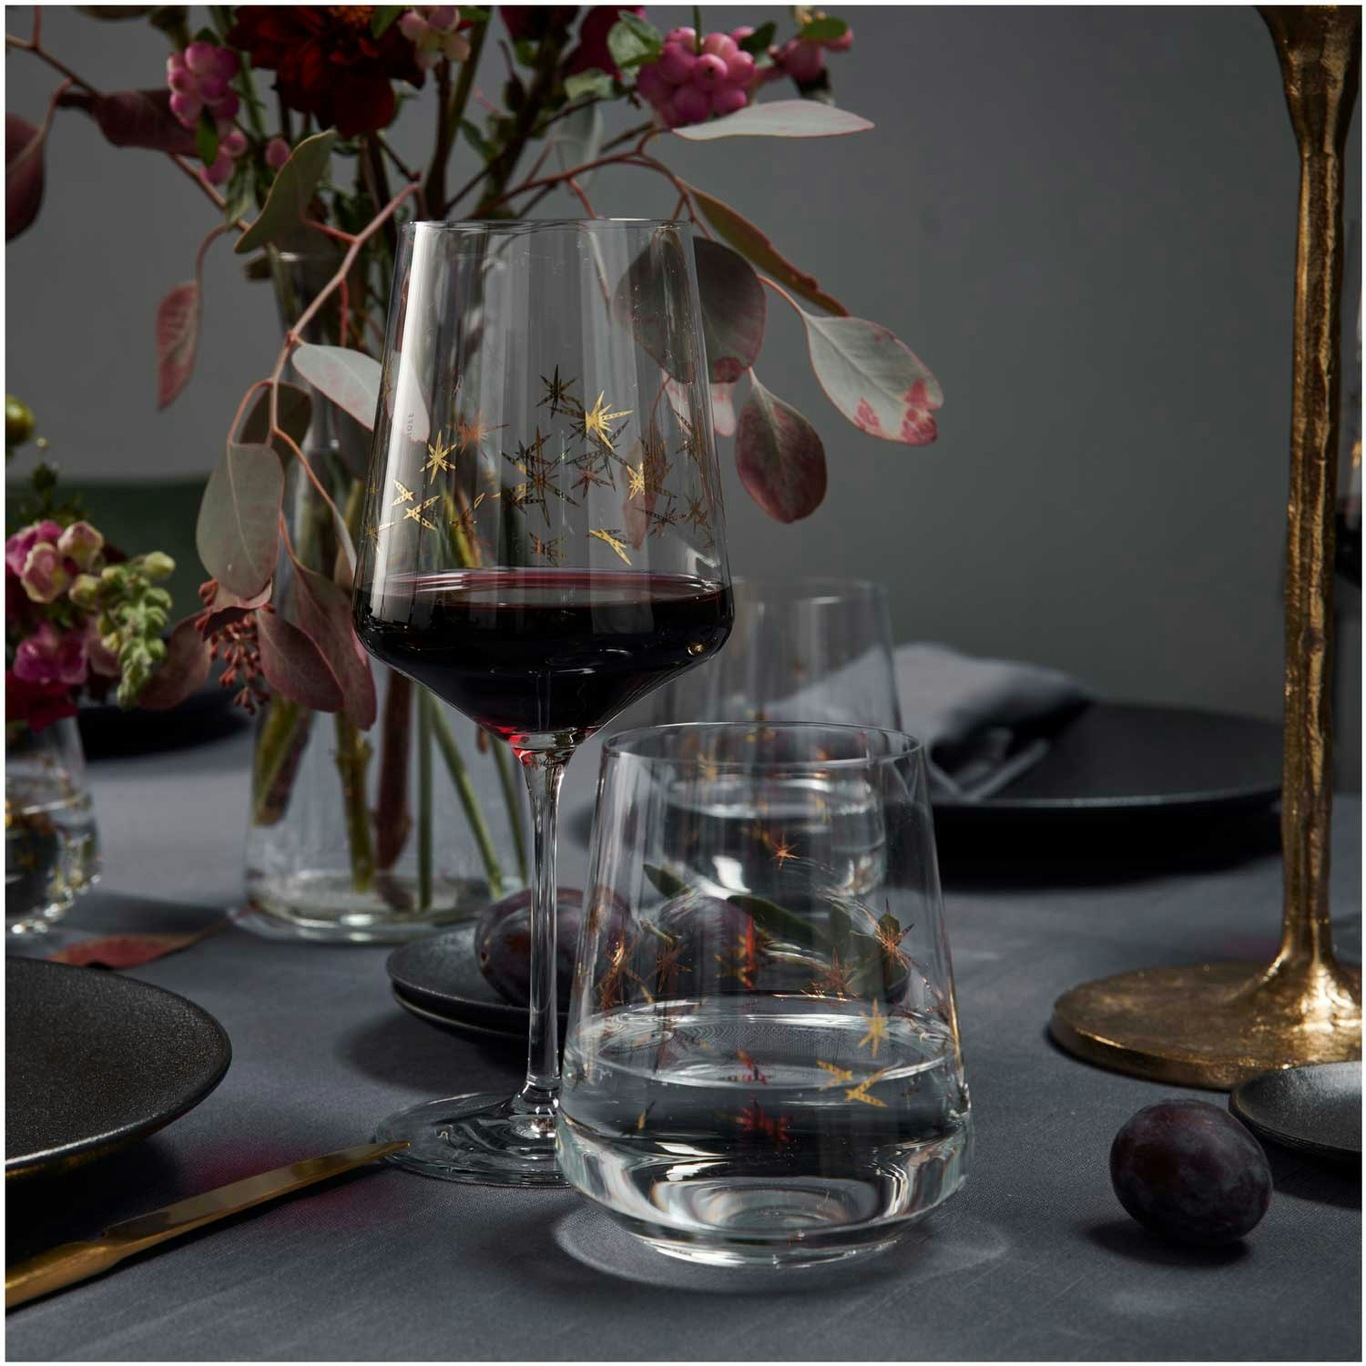 https://royaldesign.com/image/2/ritzenhoff-celebration-deluxe-red-wine-glass-stars-2-pack-54-cl-3?w=800&quality=80